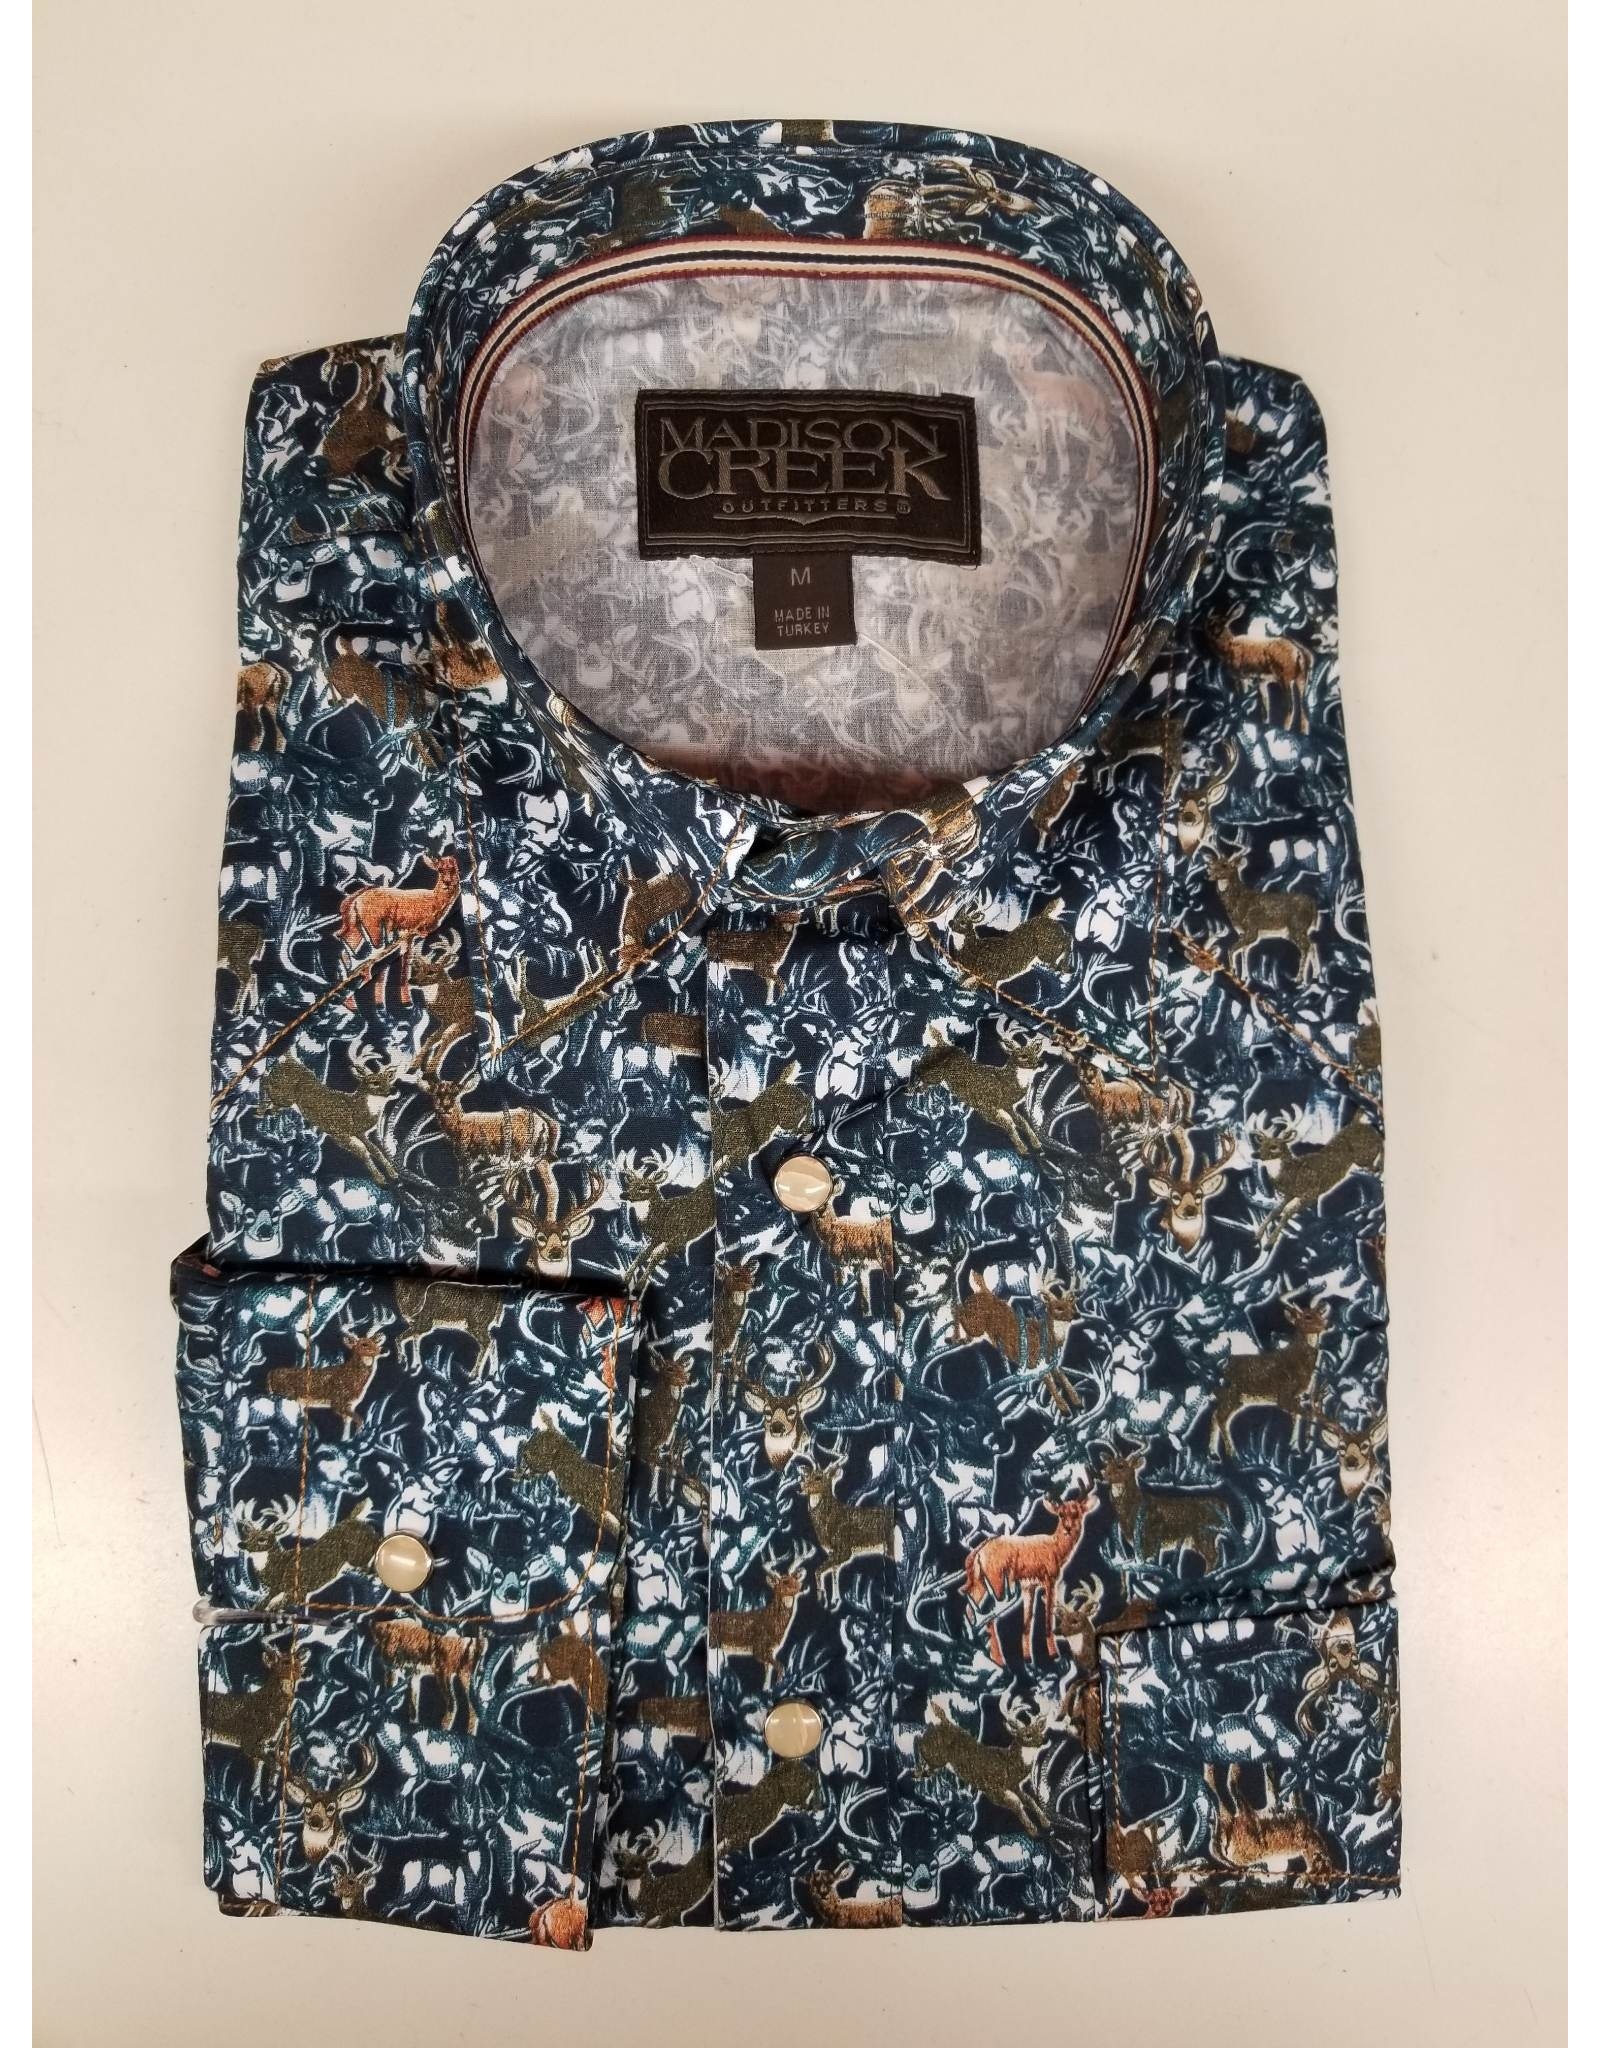 Madison Creek Outfitters Bisley Western Shirt Deer Print